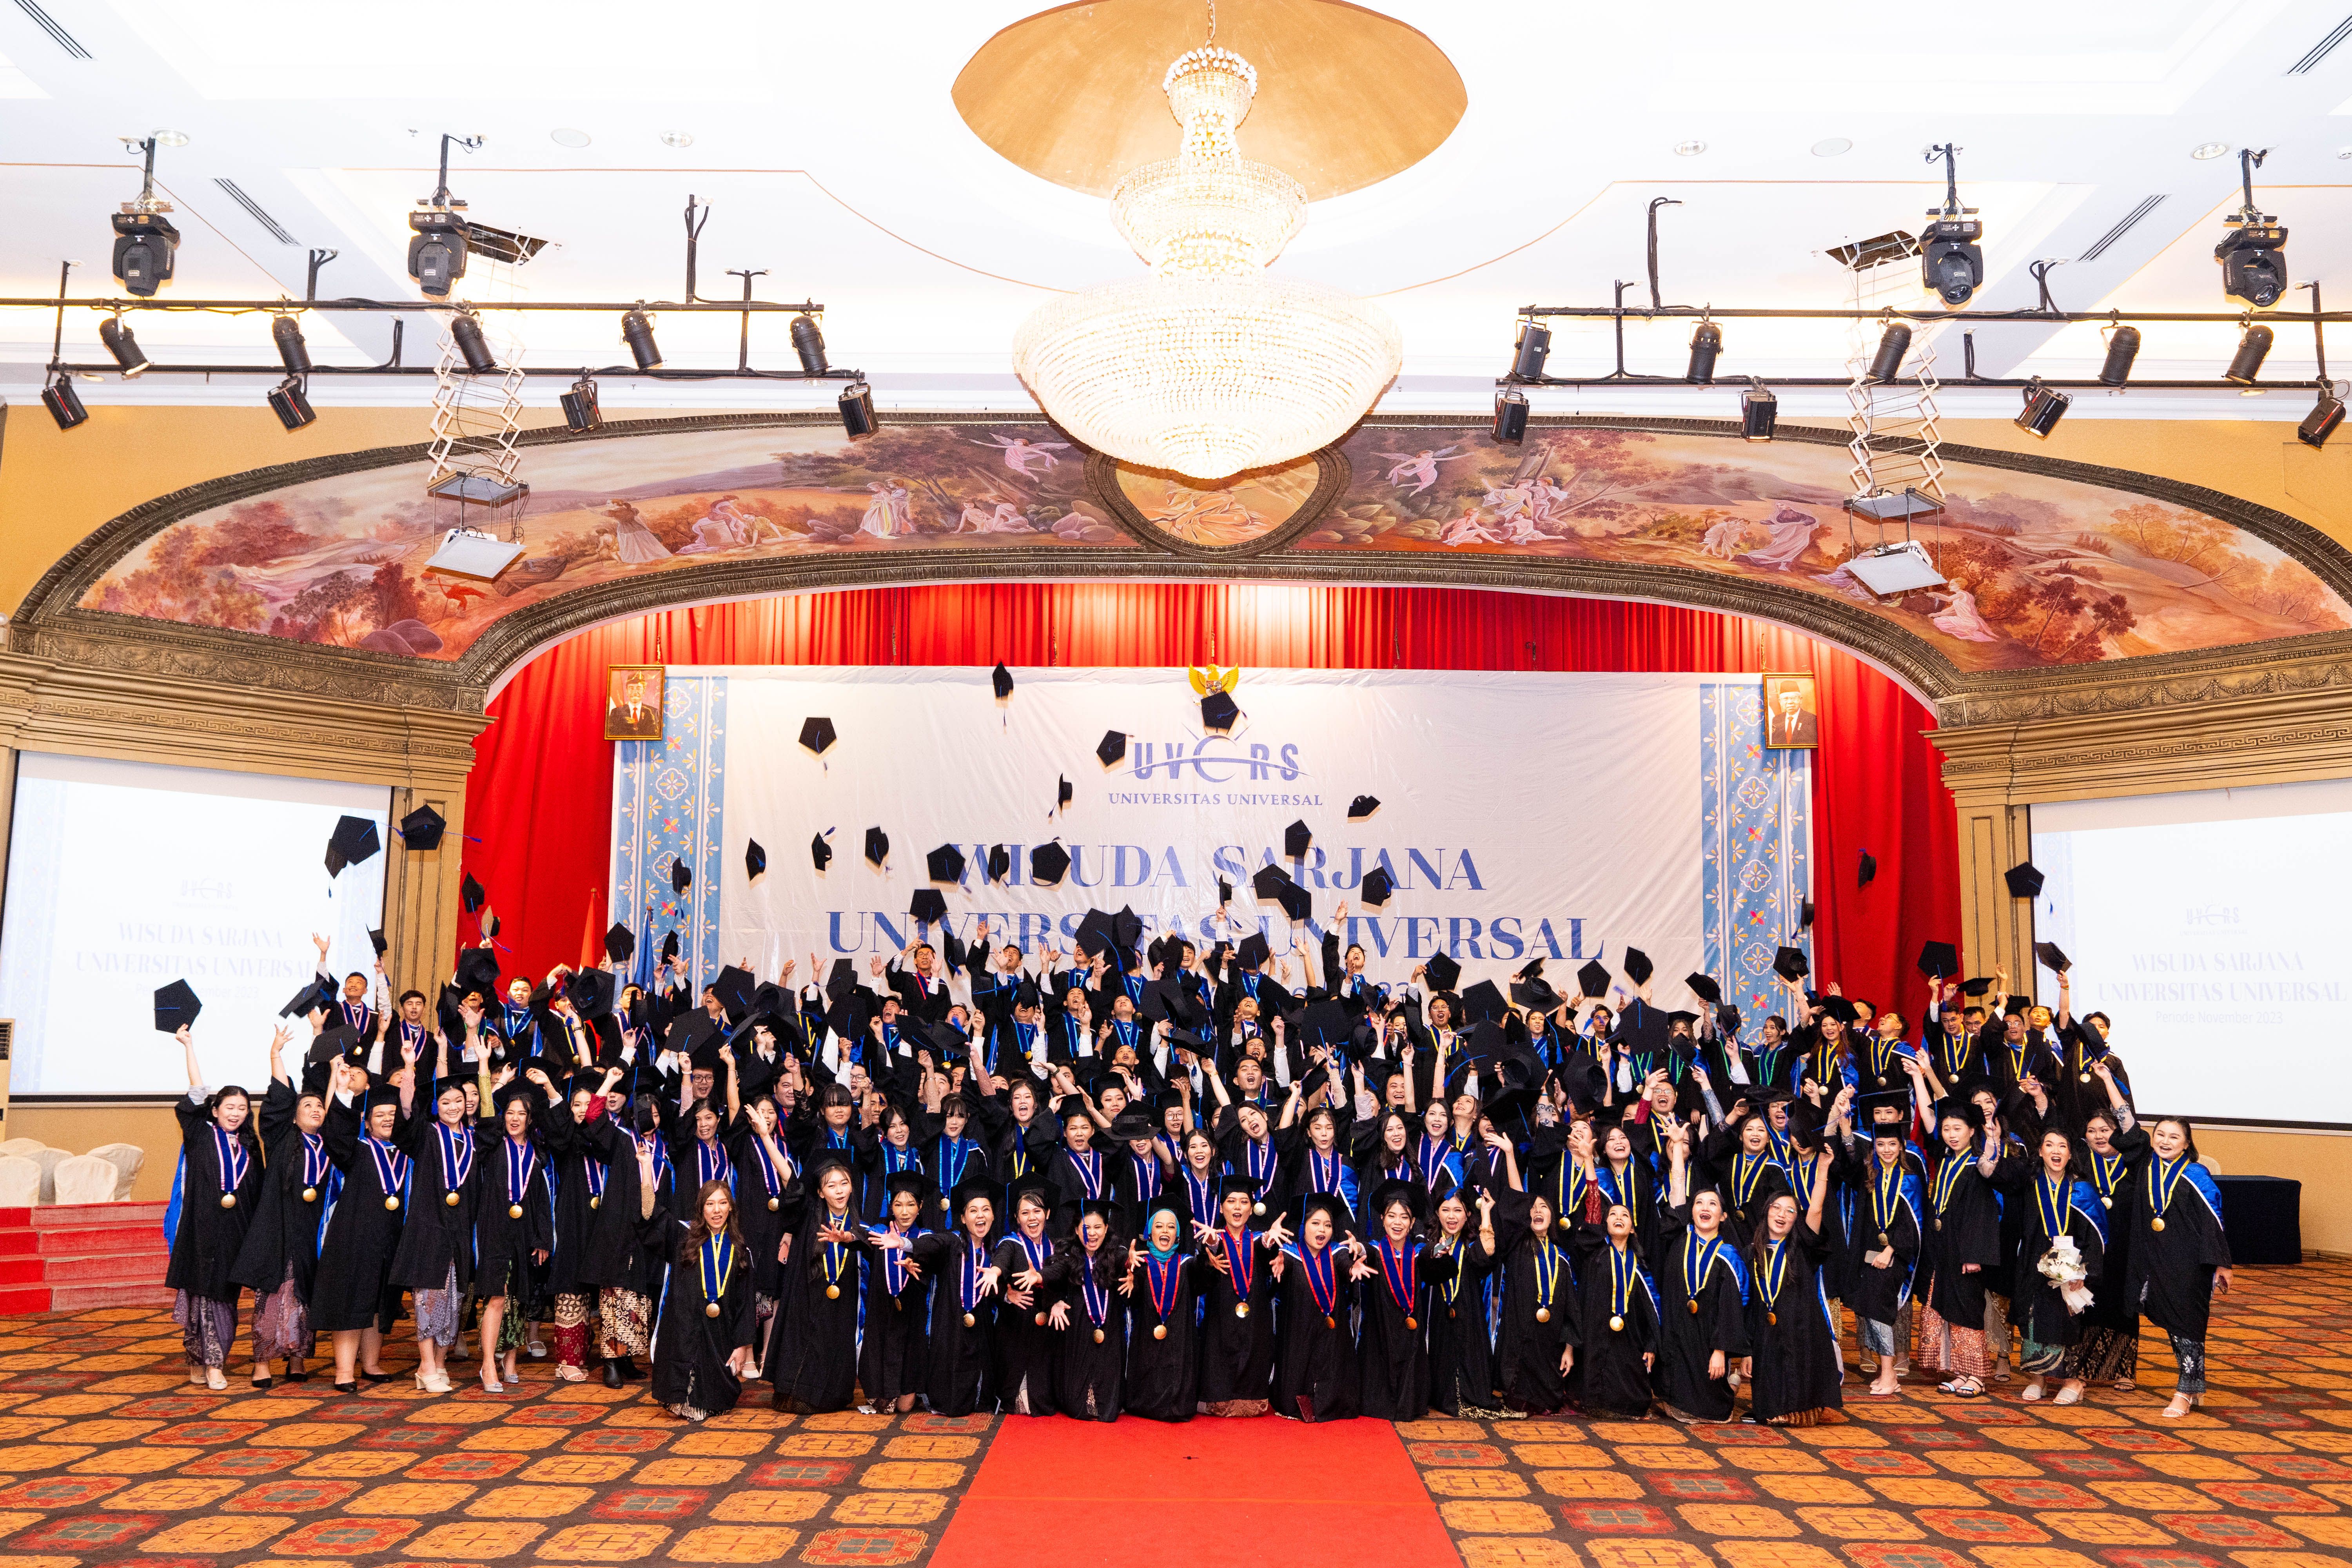 Congratulations on Universitas Universal' Undergraduate Class of 2023!